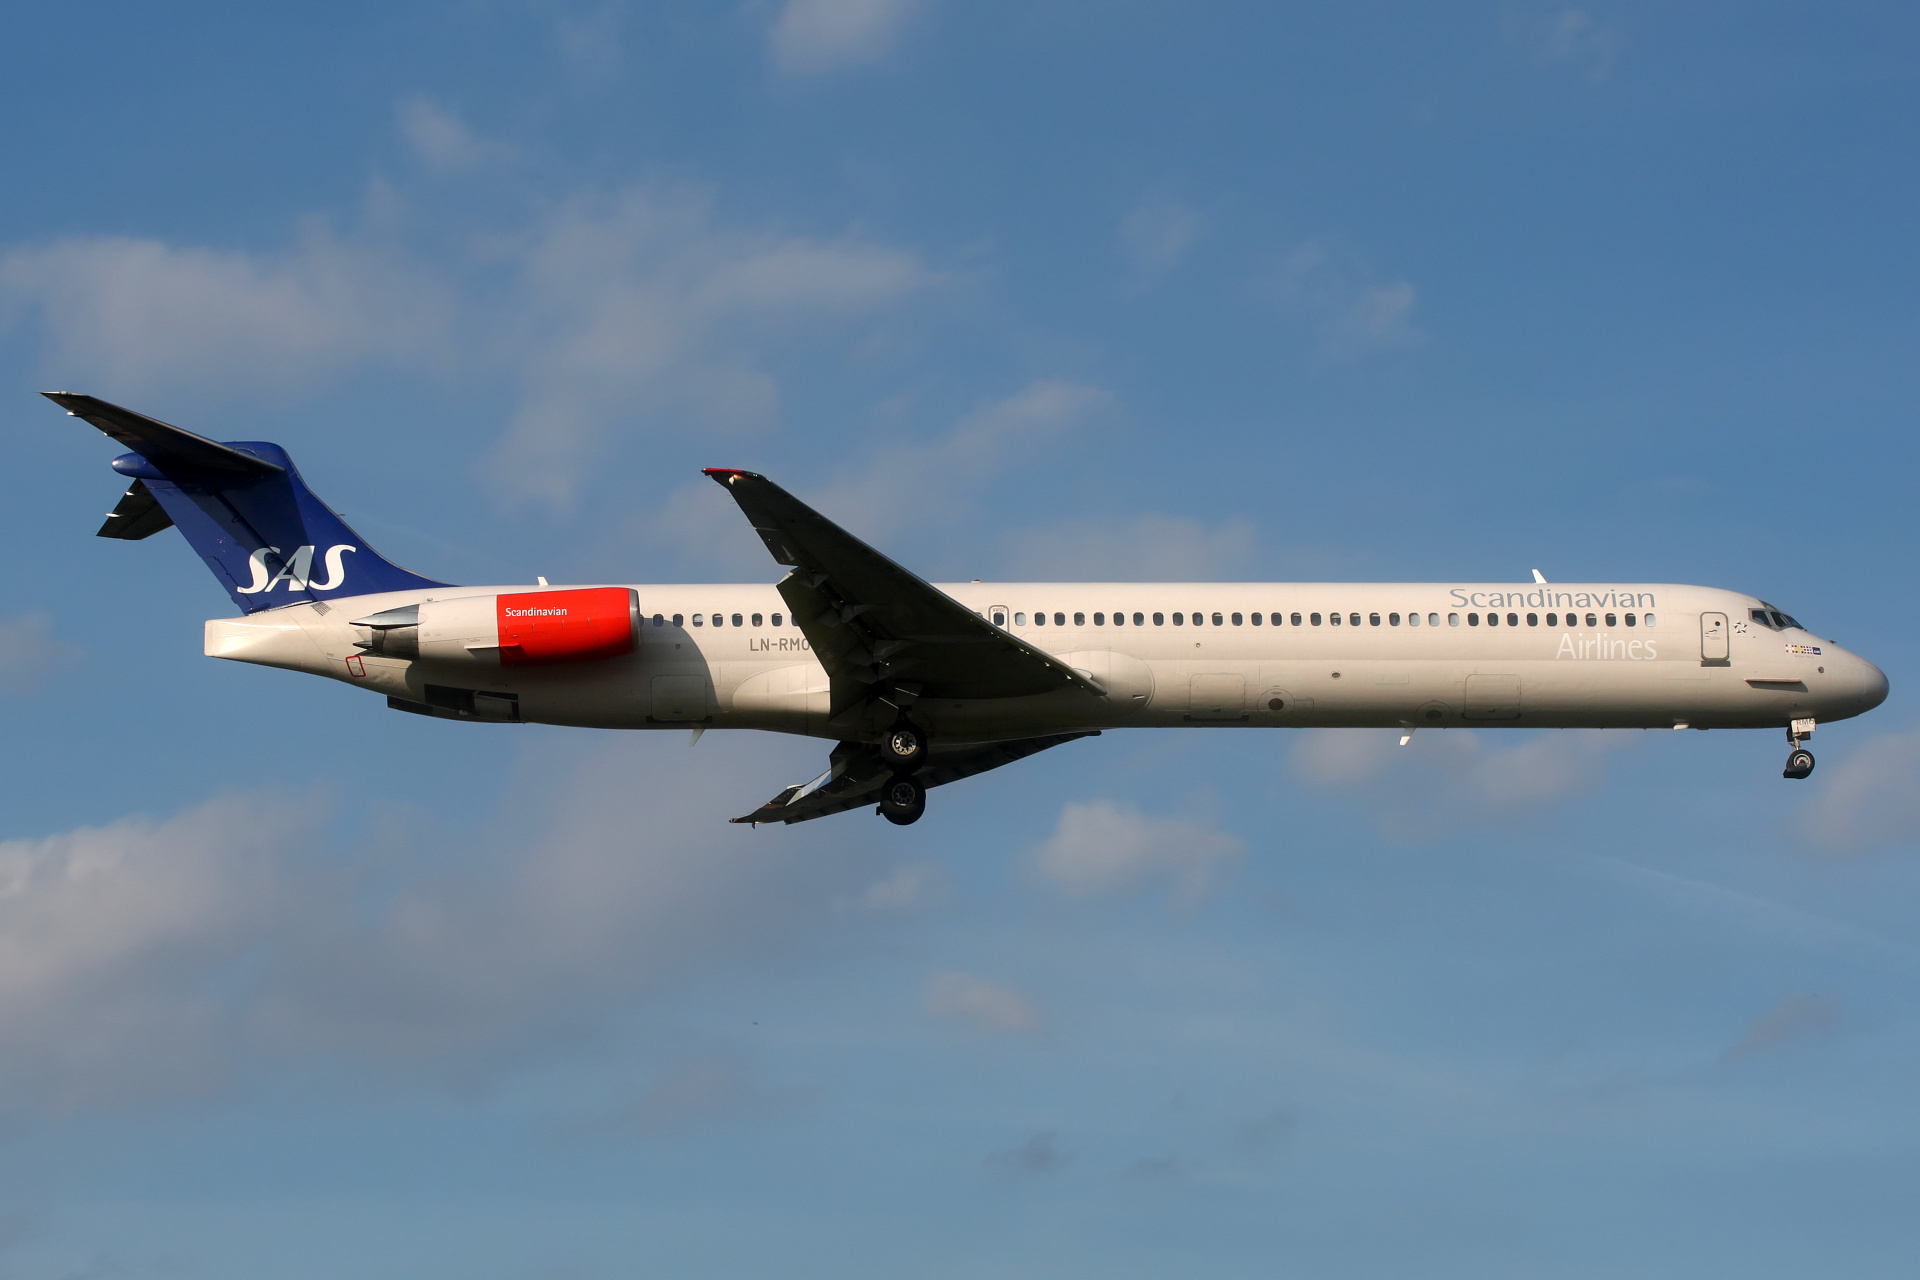 LN-RMO (Aircraft » EPWA Spotting » McDonnell Douglas MD-82 » SAS Scandinavian Airlines)